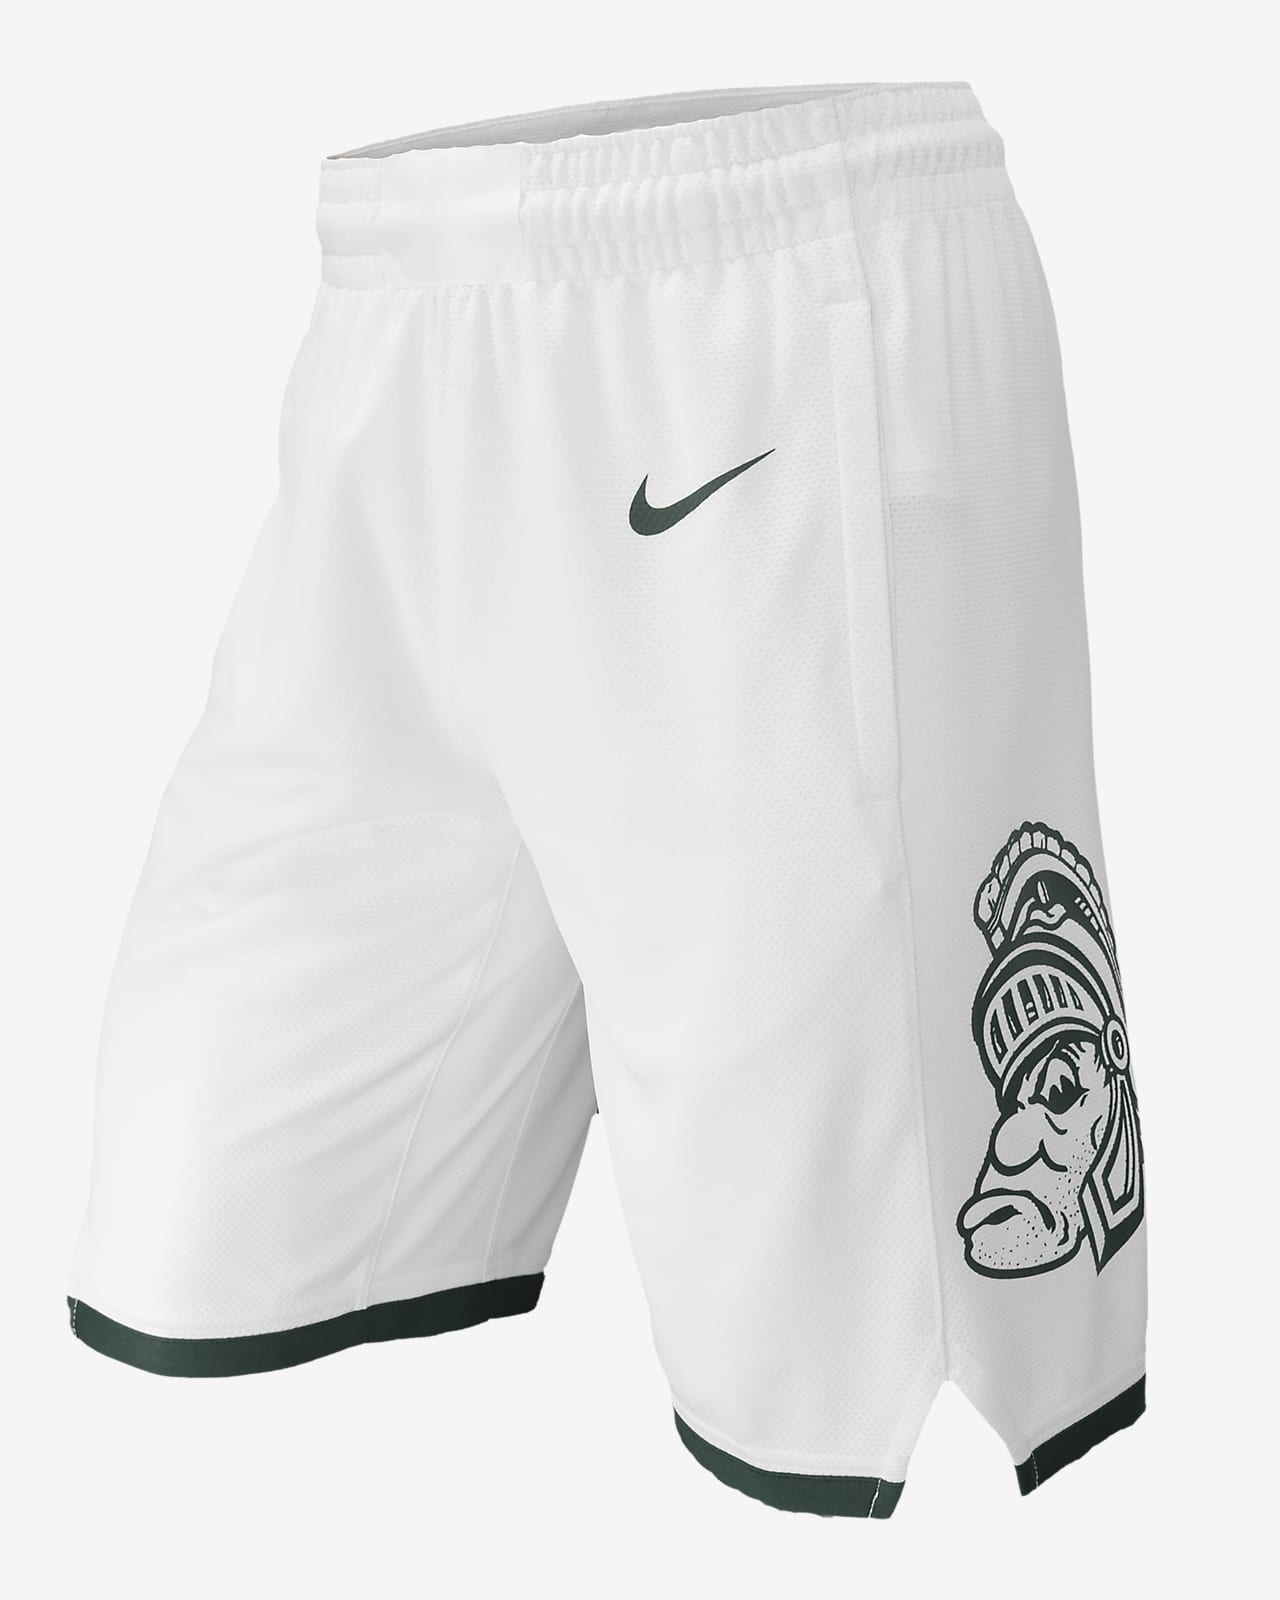 Michigan State Men's Nike College Basketball Replica Shorts